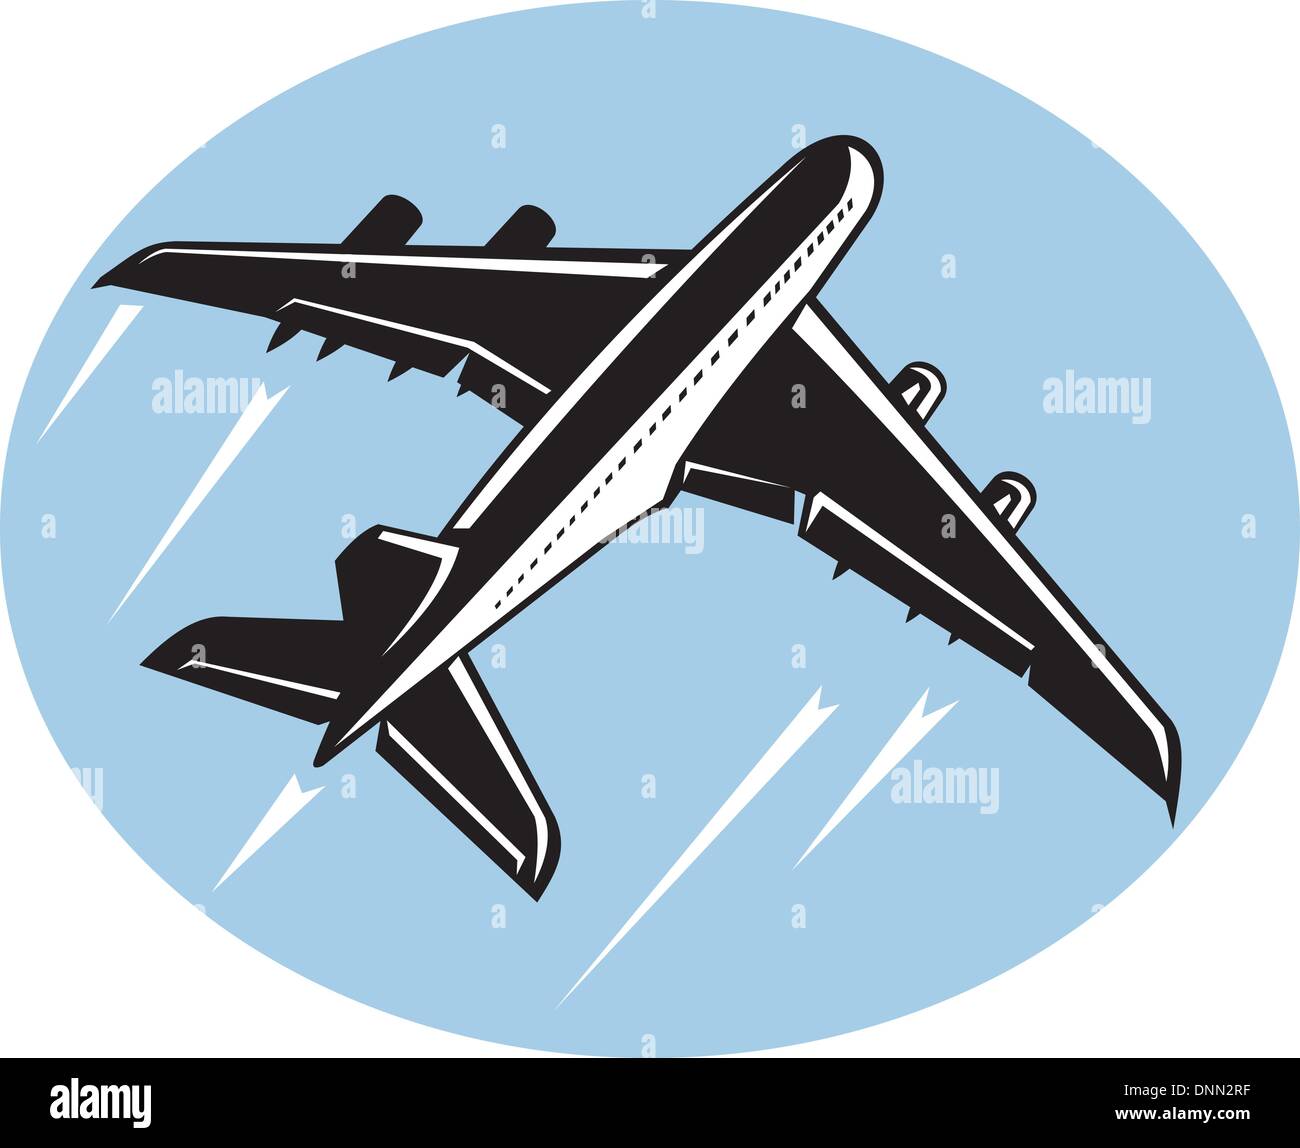 illustration of a Jumbo jet airliner taking off Stock Vector